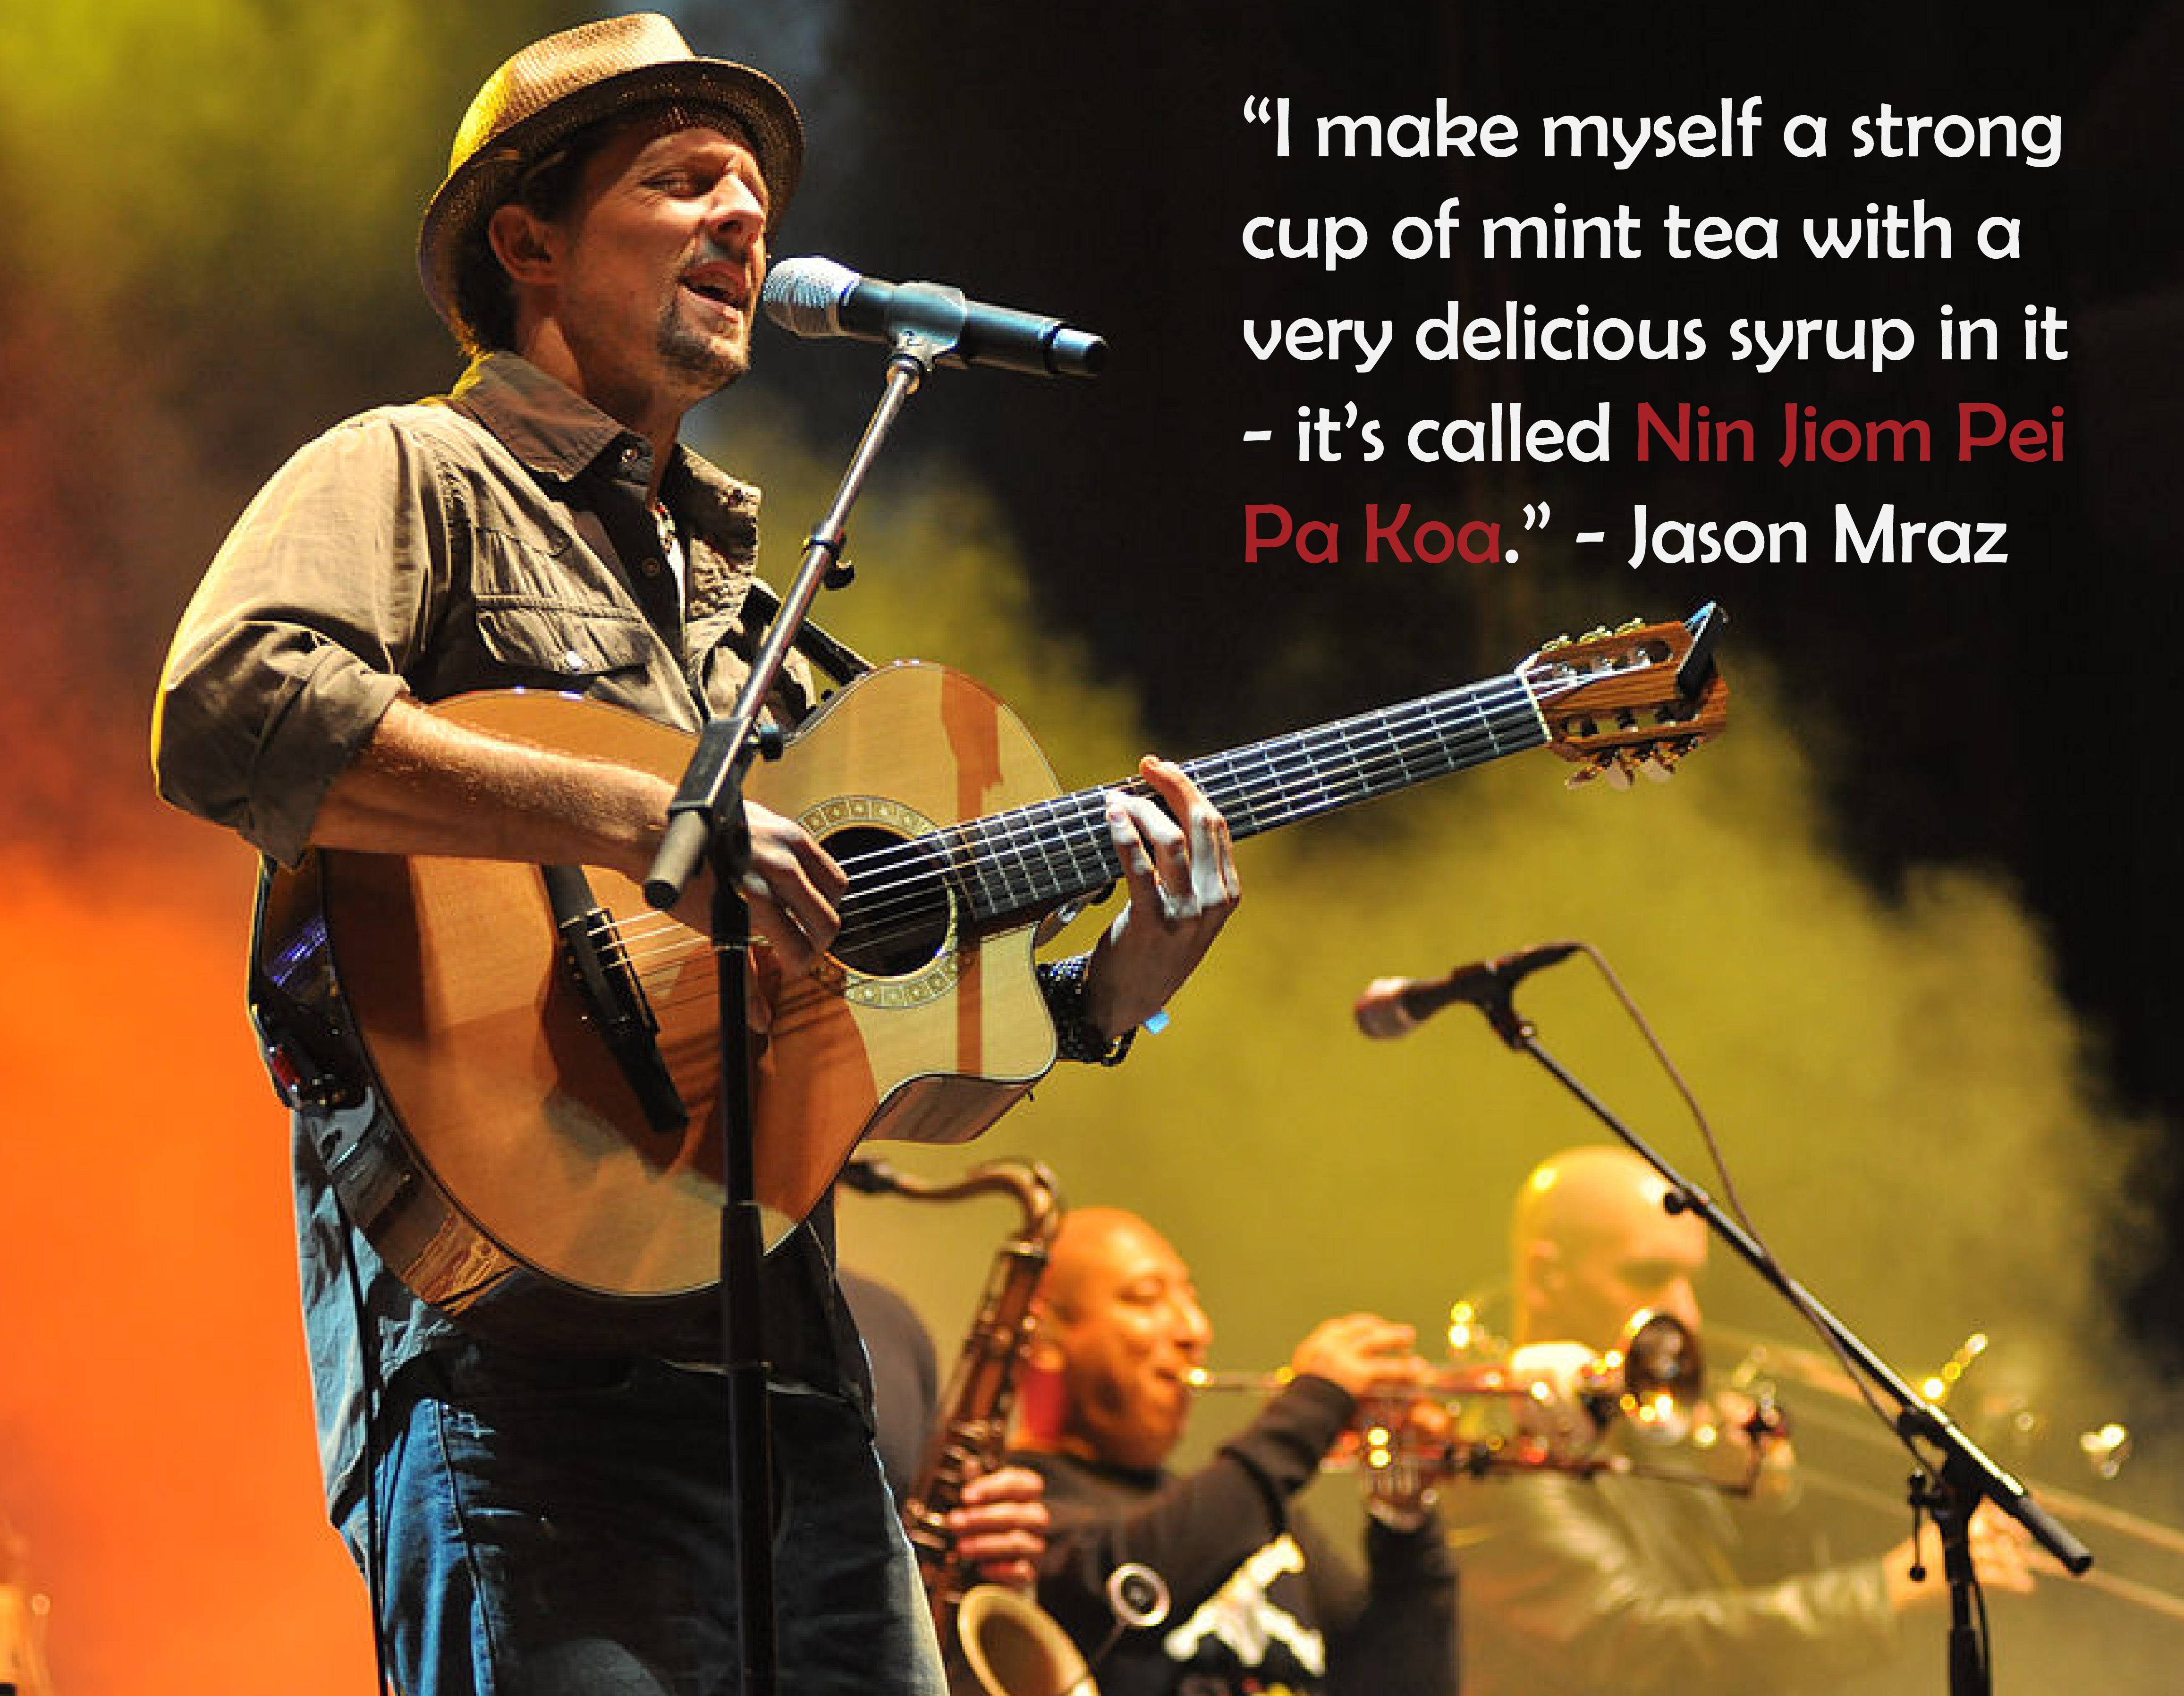 Grammy winner Jason Mraz warms up with Nin Jiom Pei Pa Koa